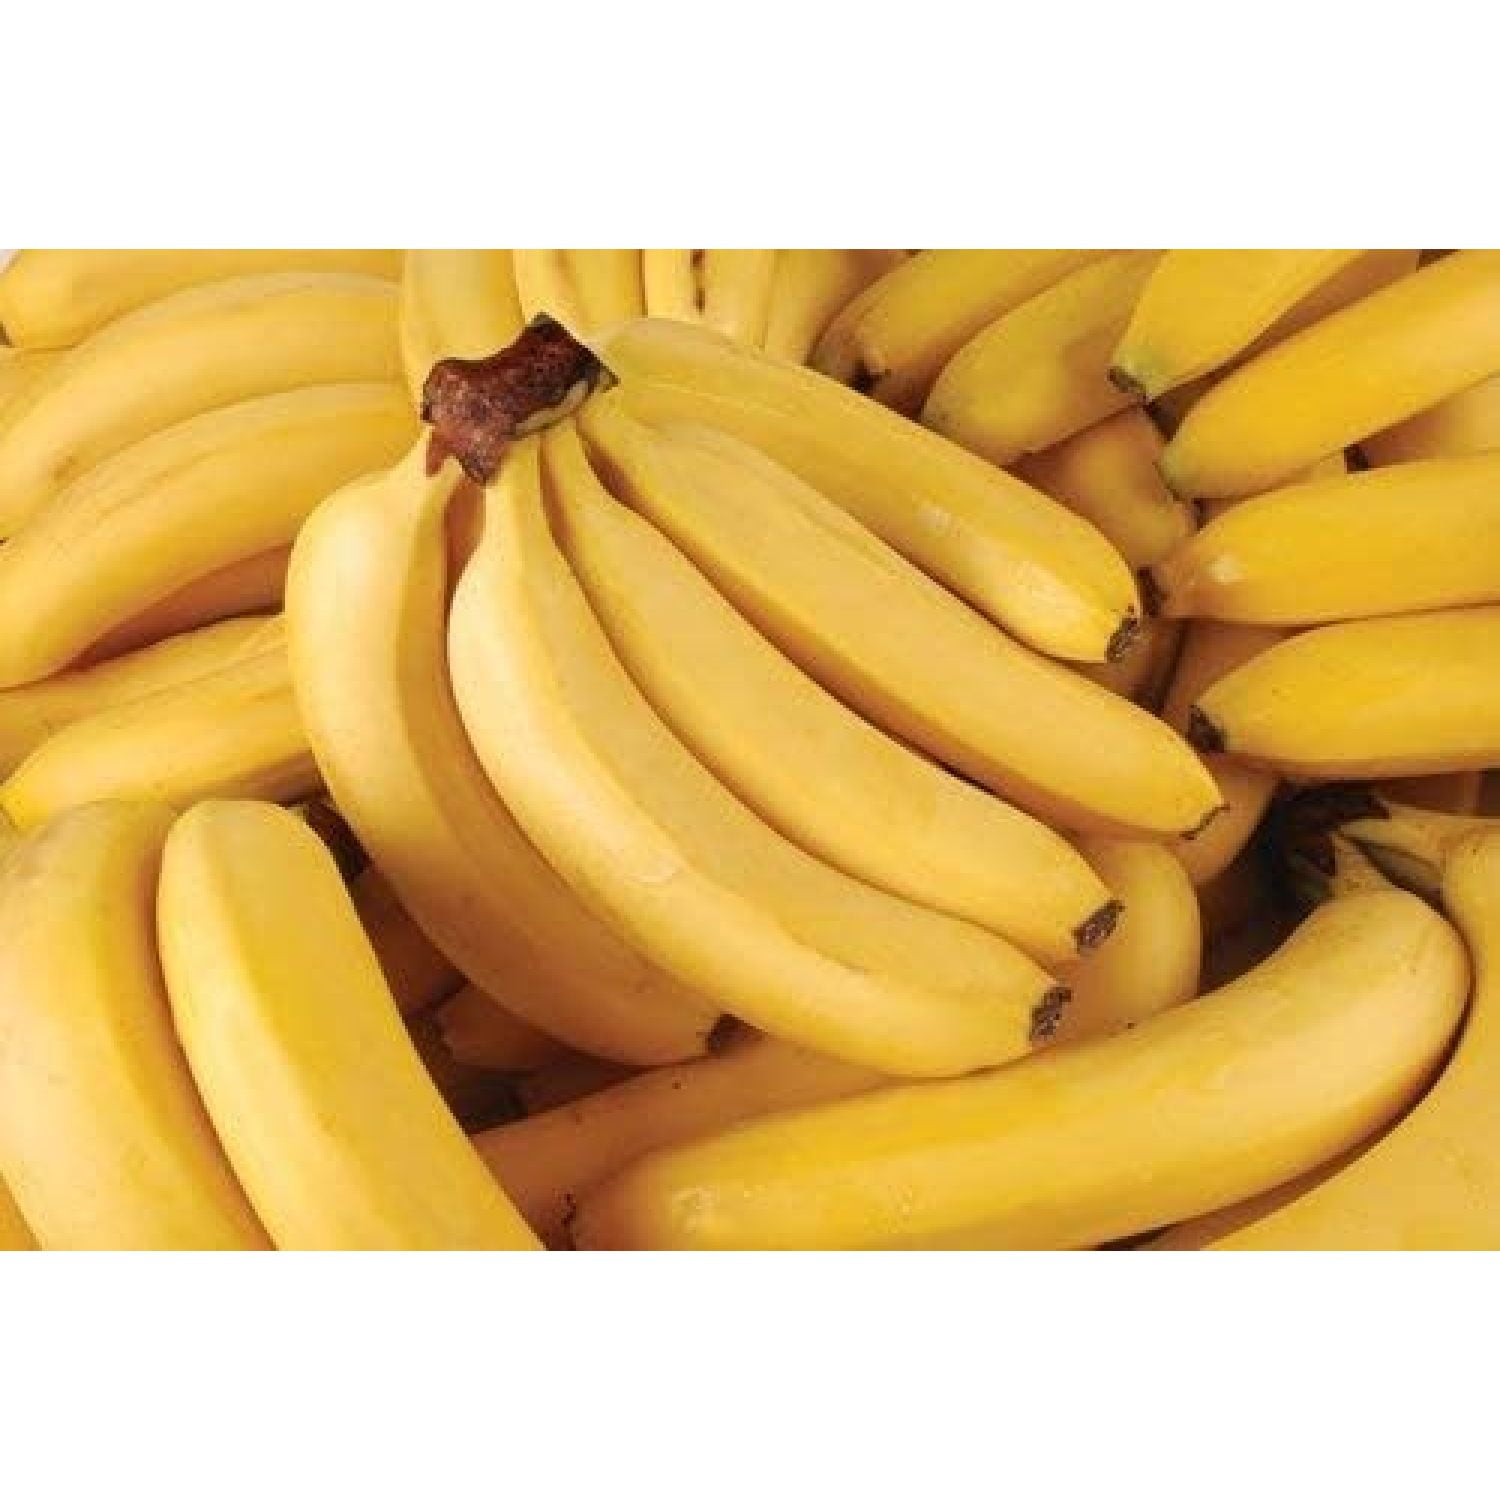 Organic Bananas Approximately 3 Lbs 1 Bunch Of 6 9 Bananas Premium